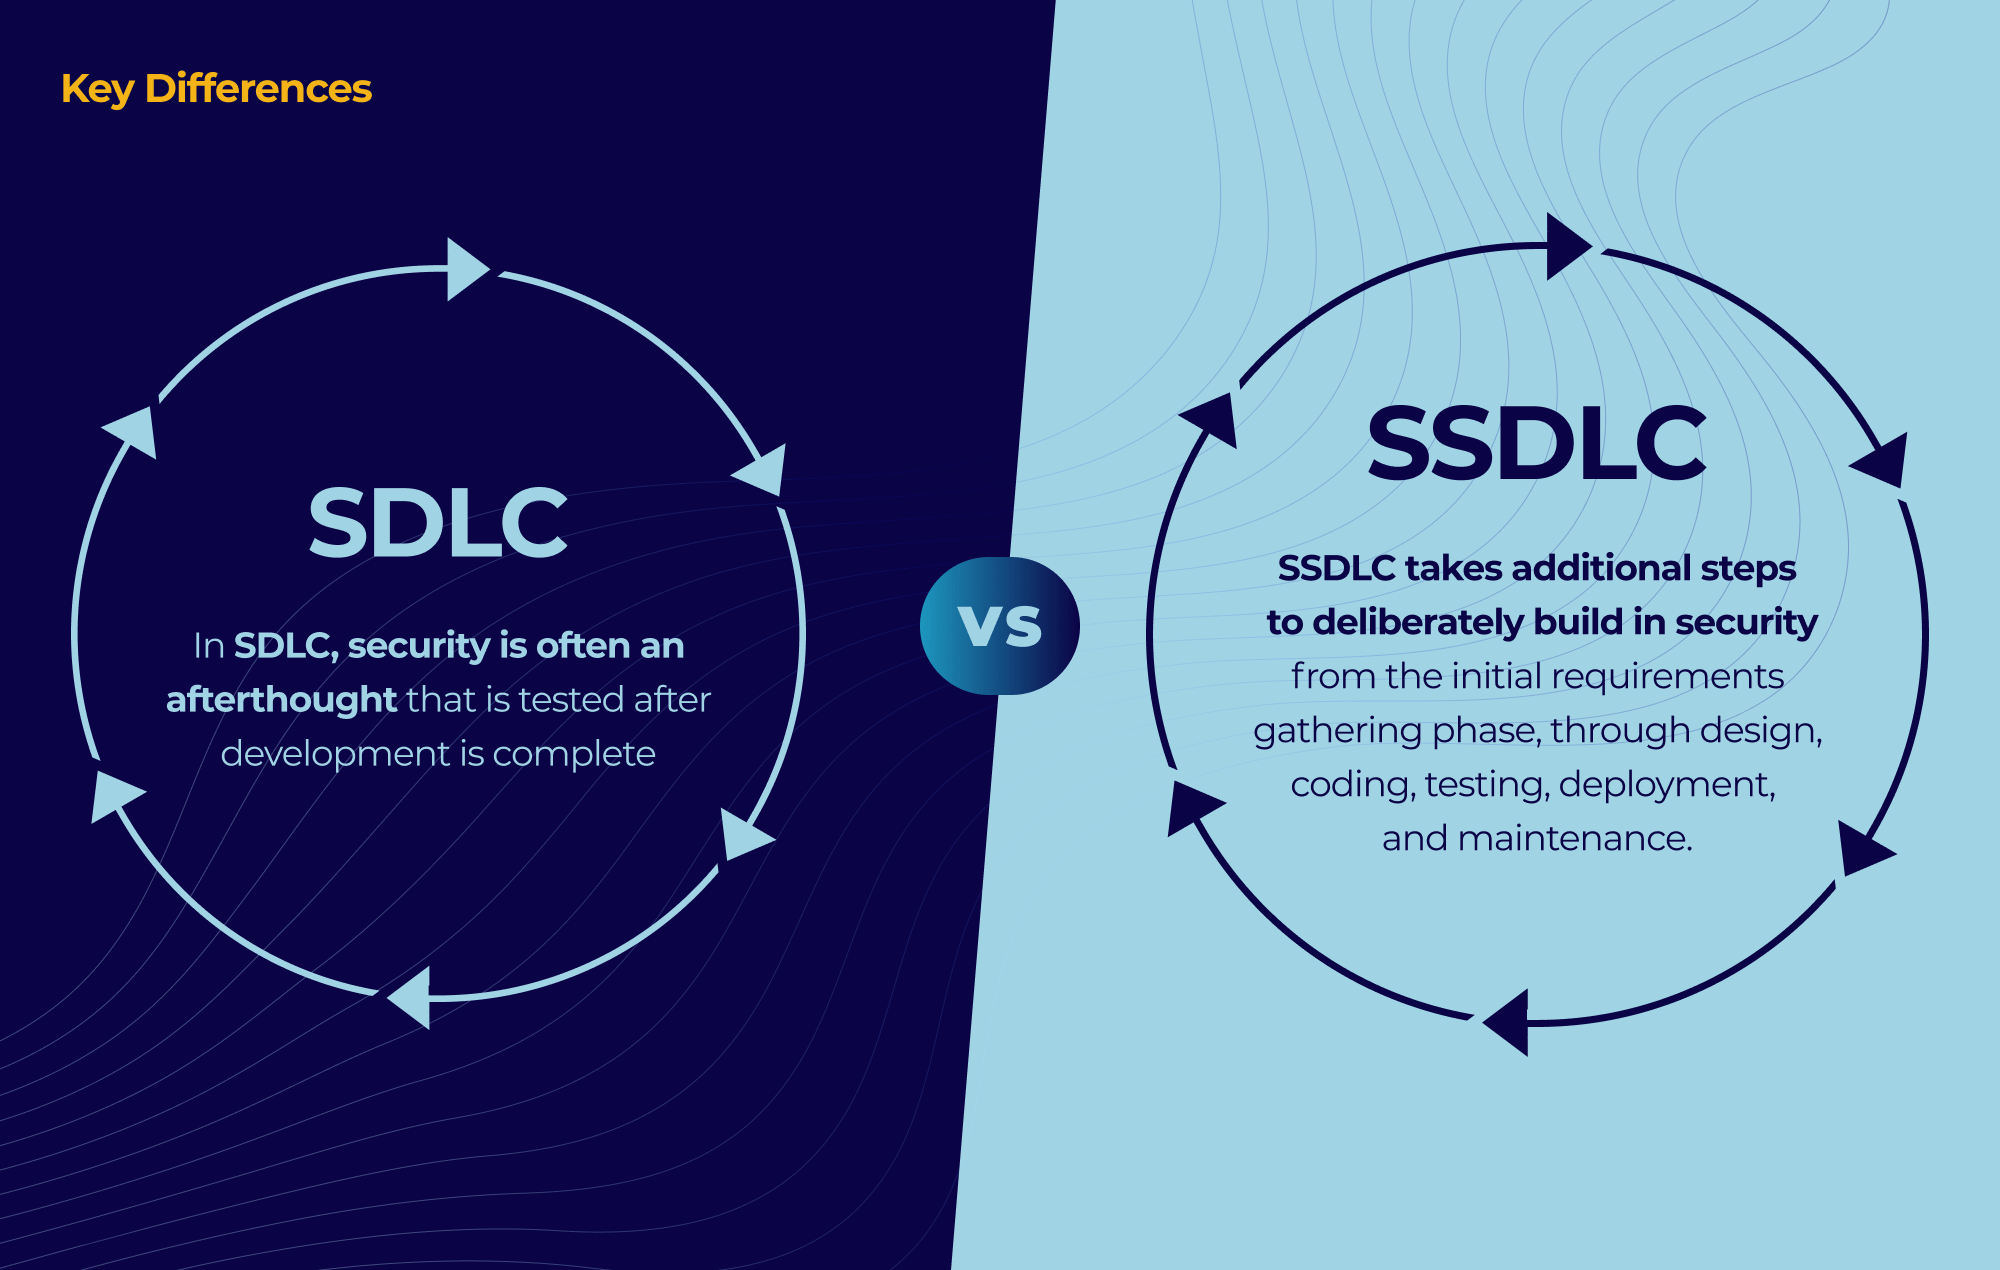 Ideamaker - Key Differences Between SSDLC and SDLC (SSDLC vs SDLC)